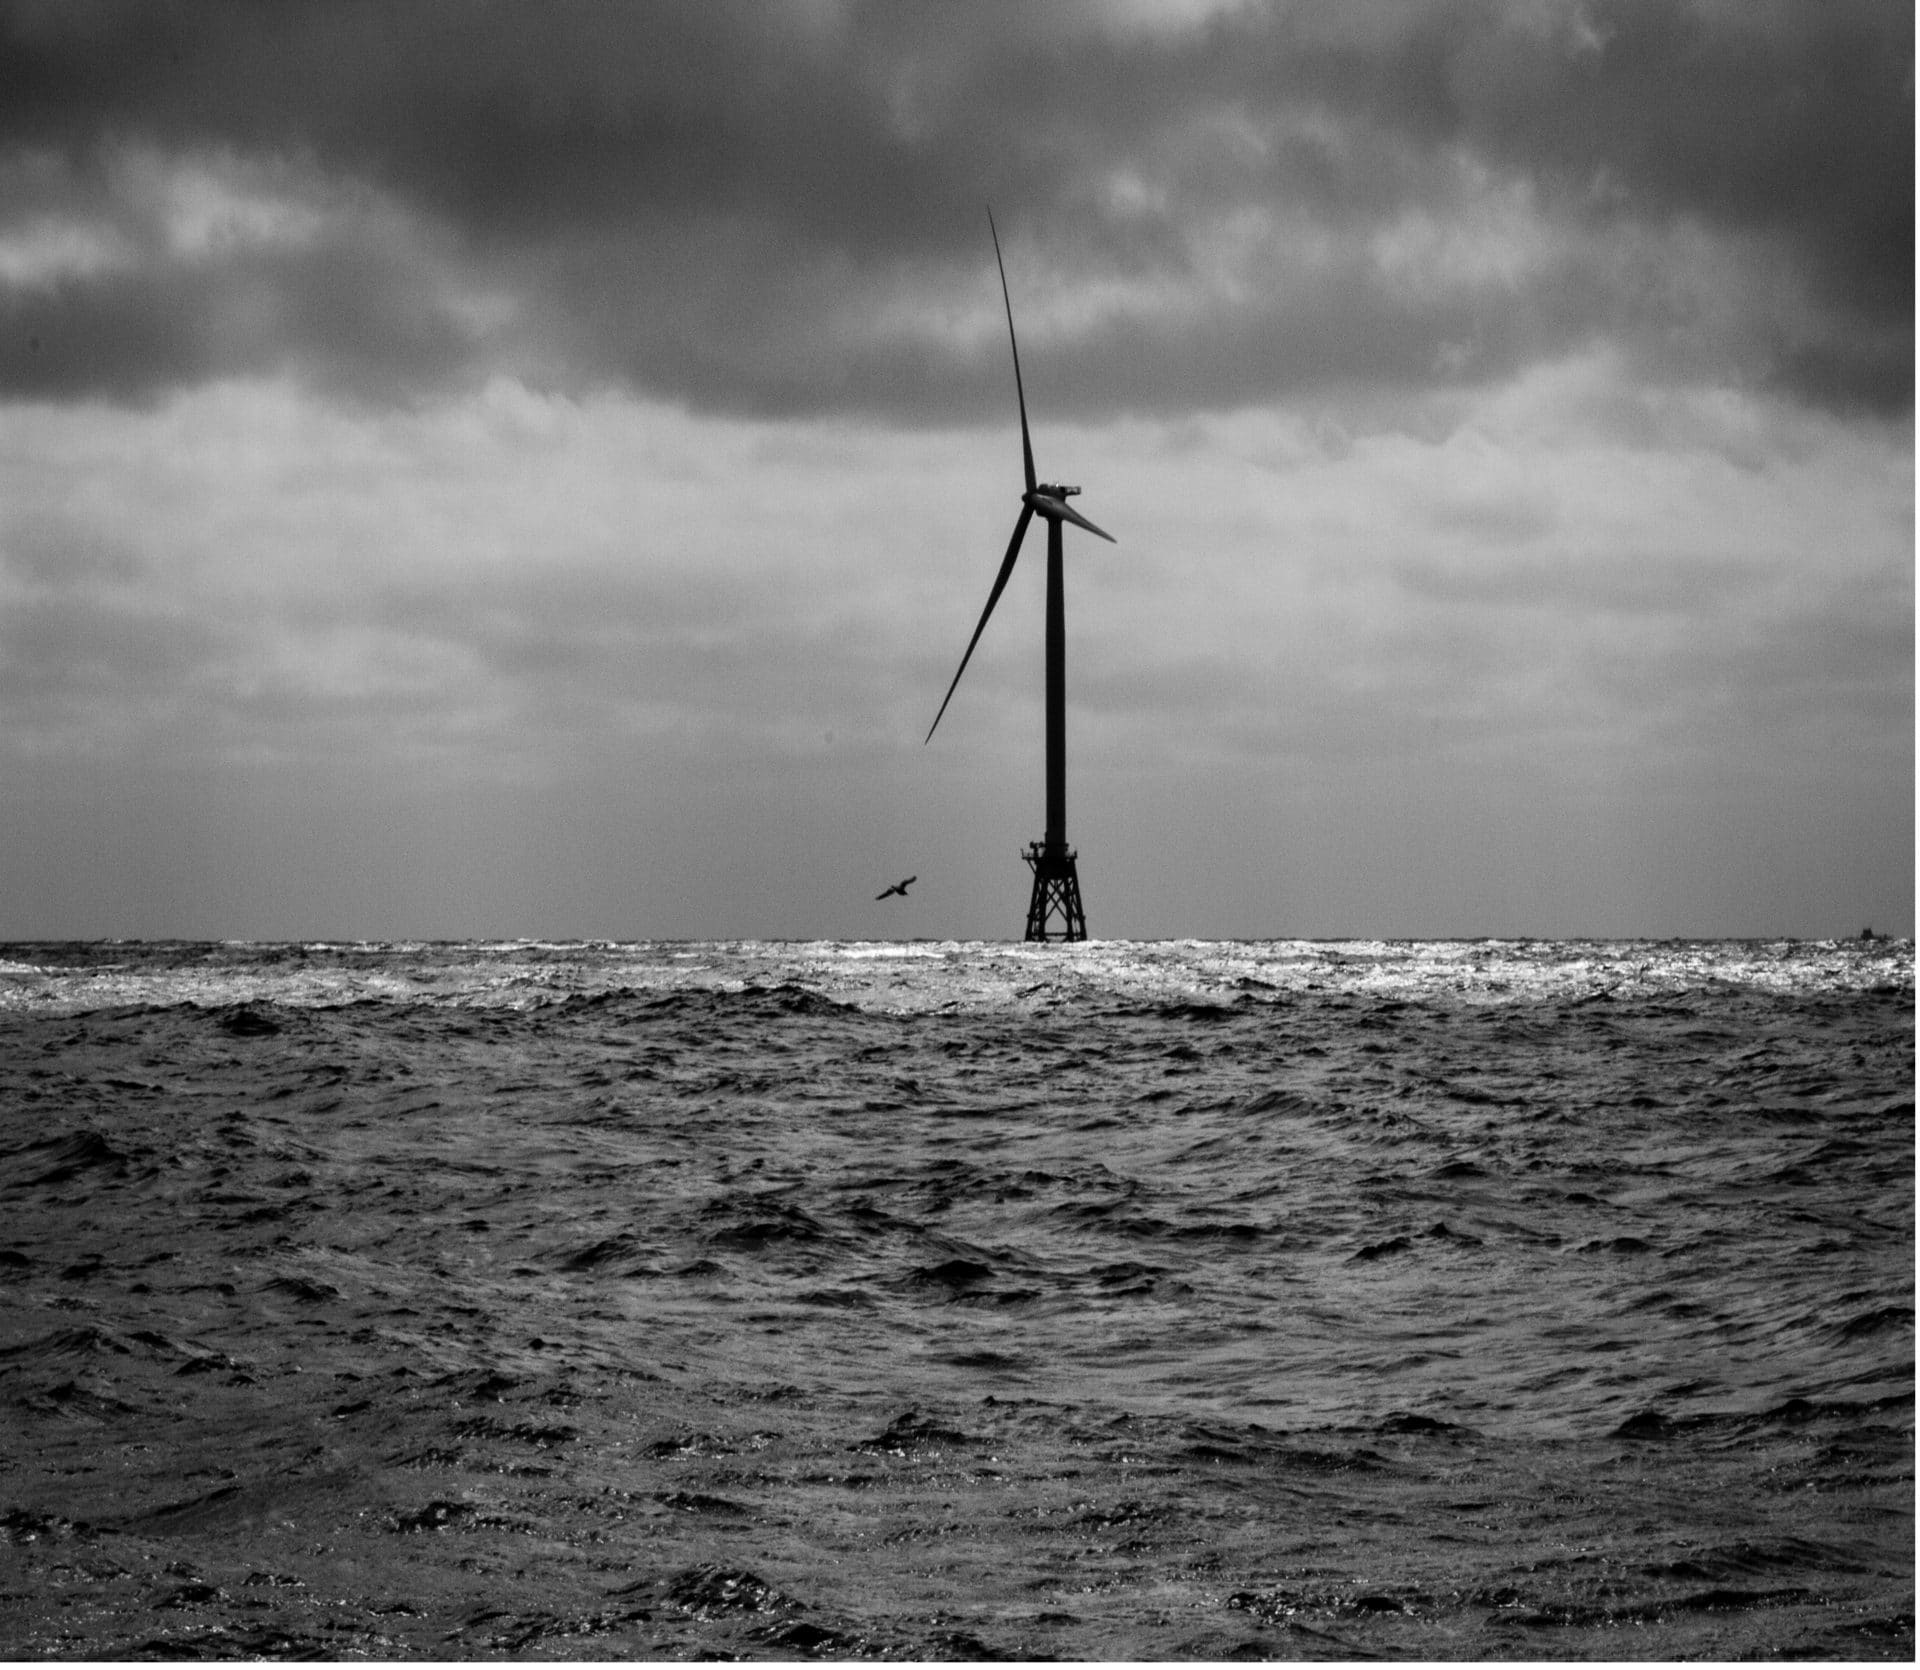 https://thebulletin.org/wp-content/uploads/2021/03/Offshore-windmill-BW-150x150.jpg